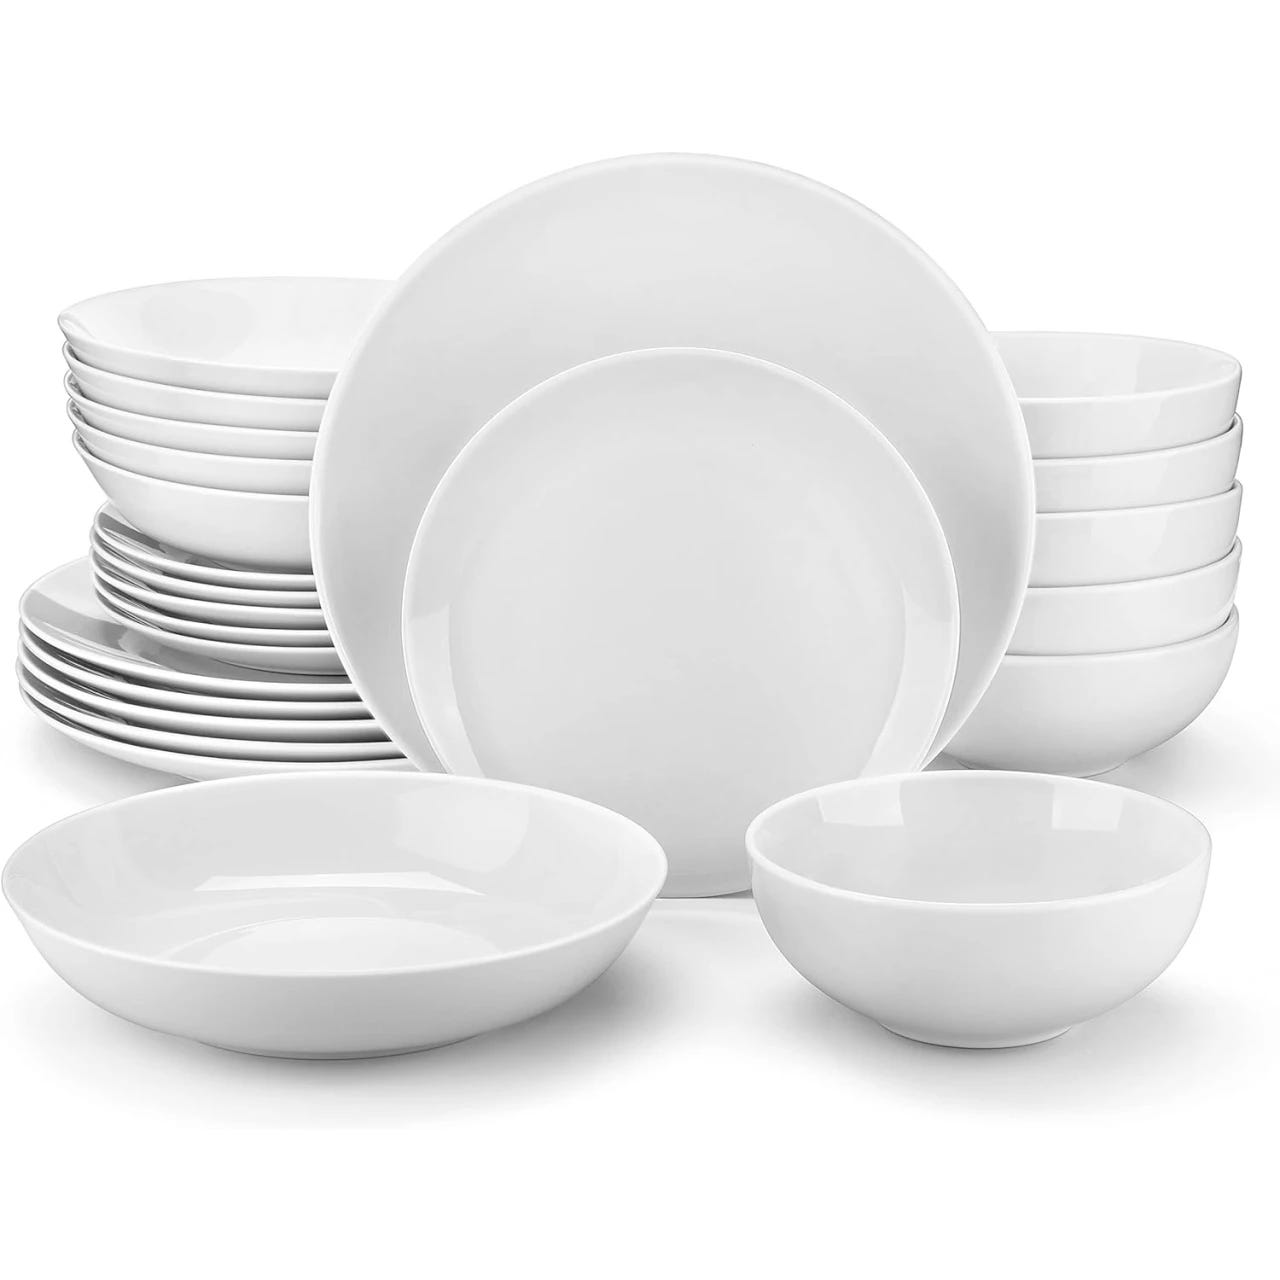 2023 Dinnerware Sets Review: Basics, amhomel, Stone Lain